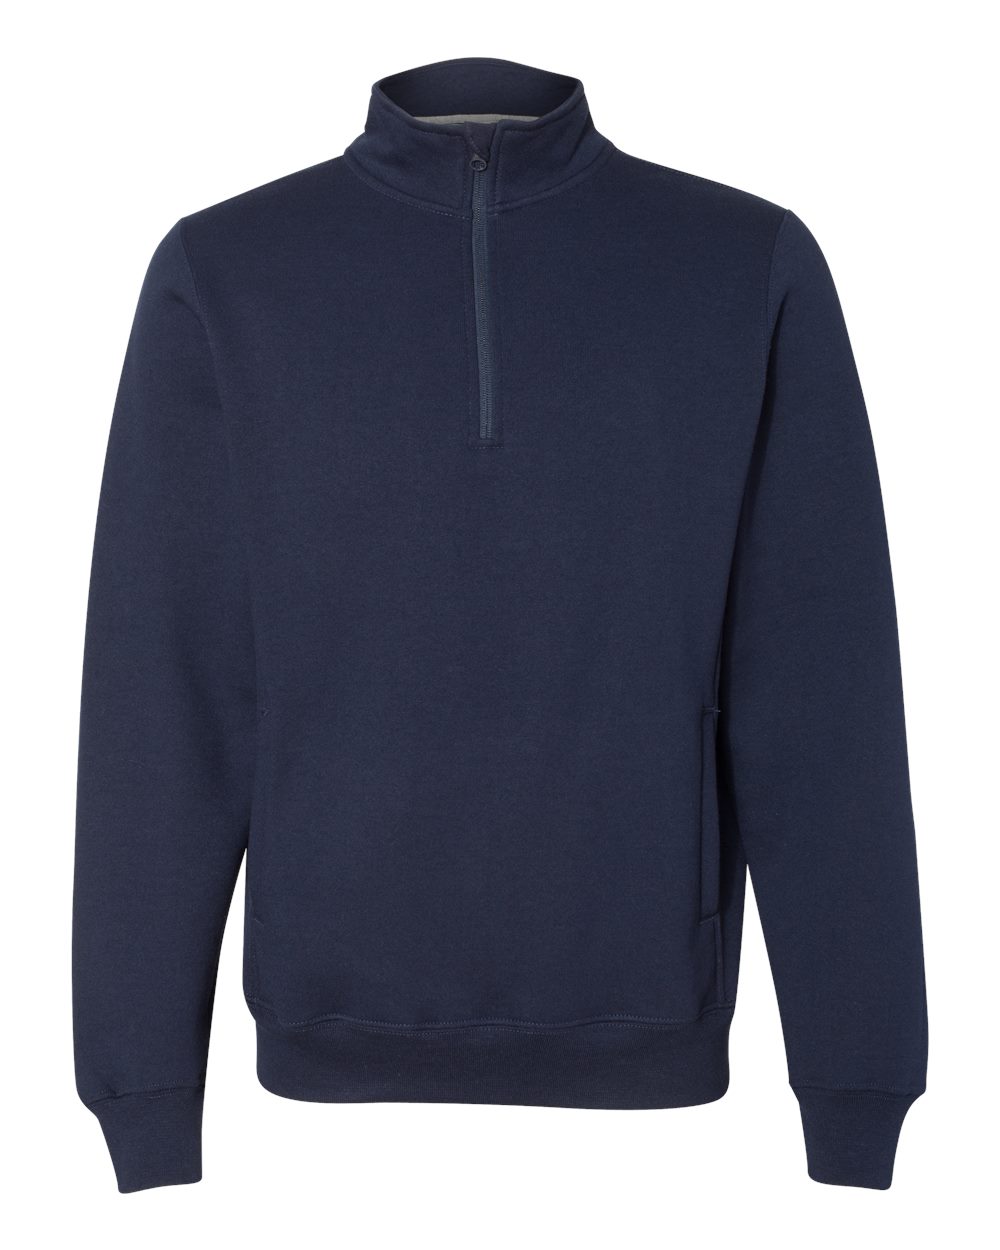 Russell Athletic Blank Plain Quarter-Zip Cadet Collar Sweatshirt 